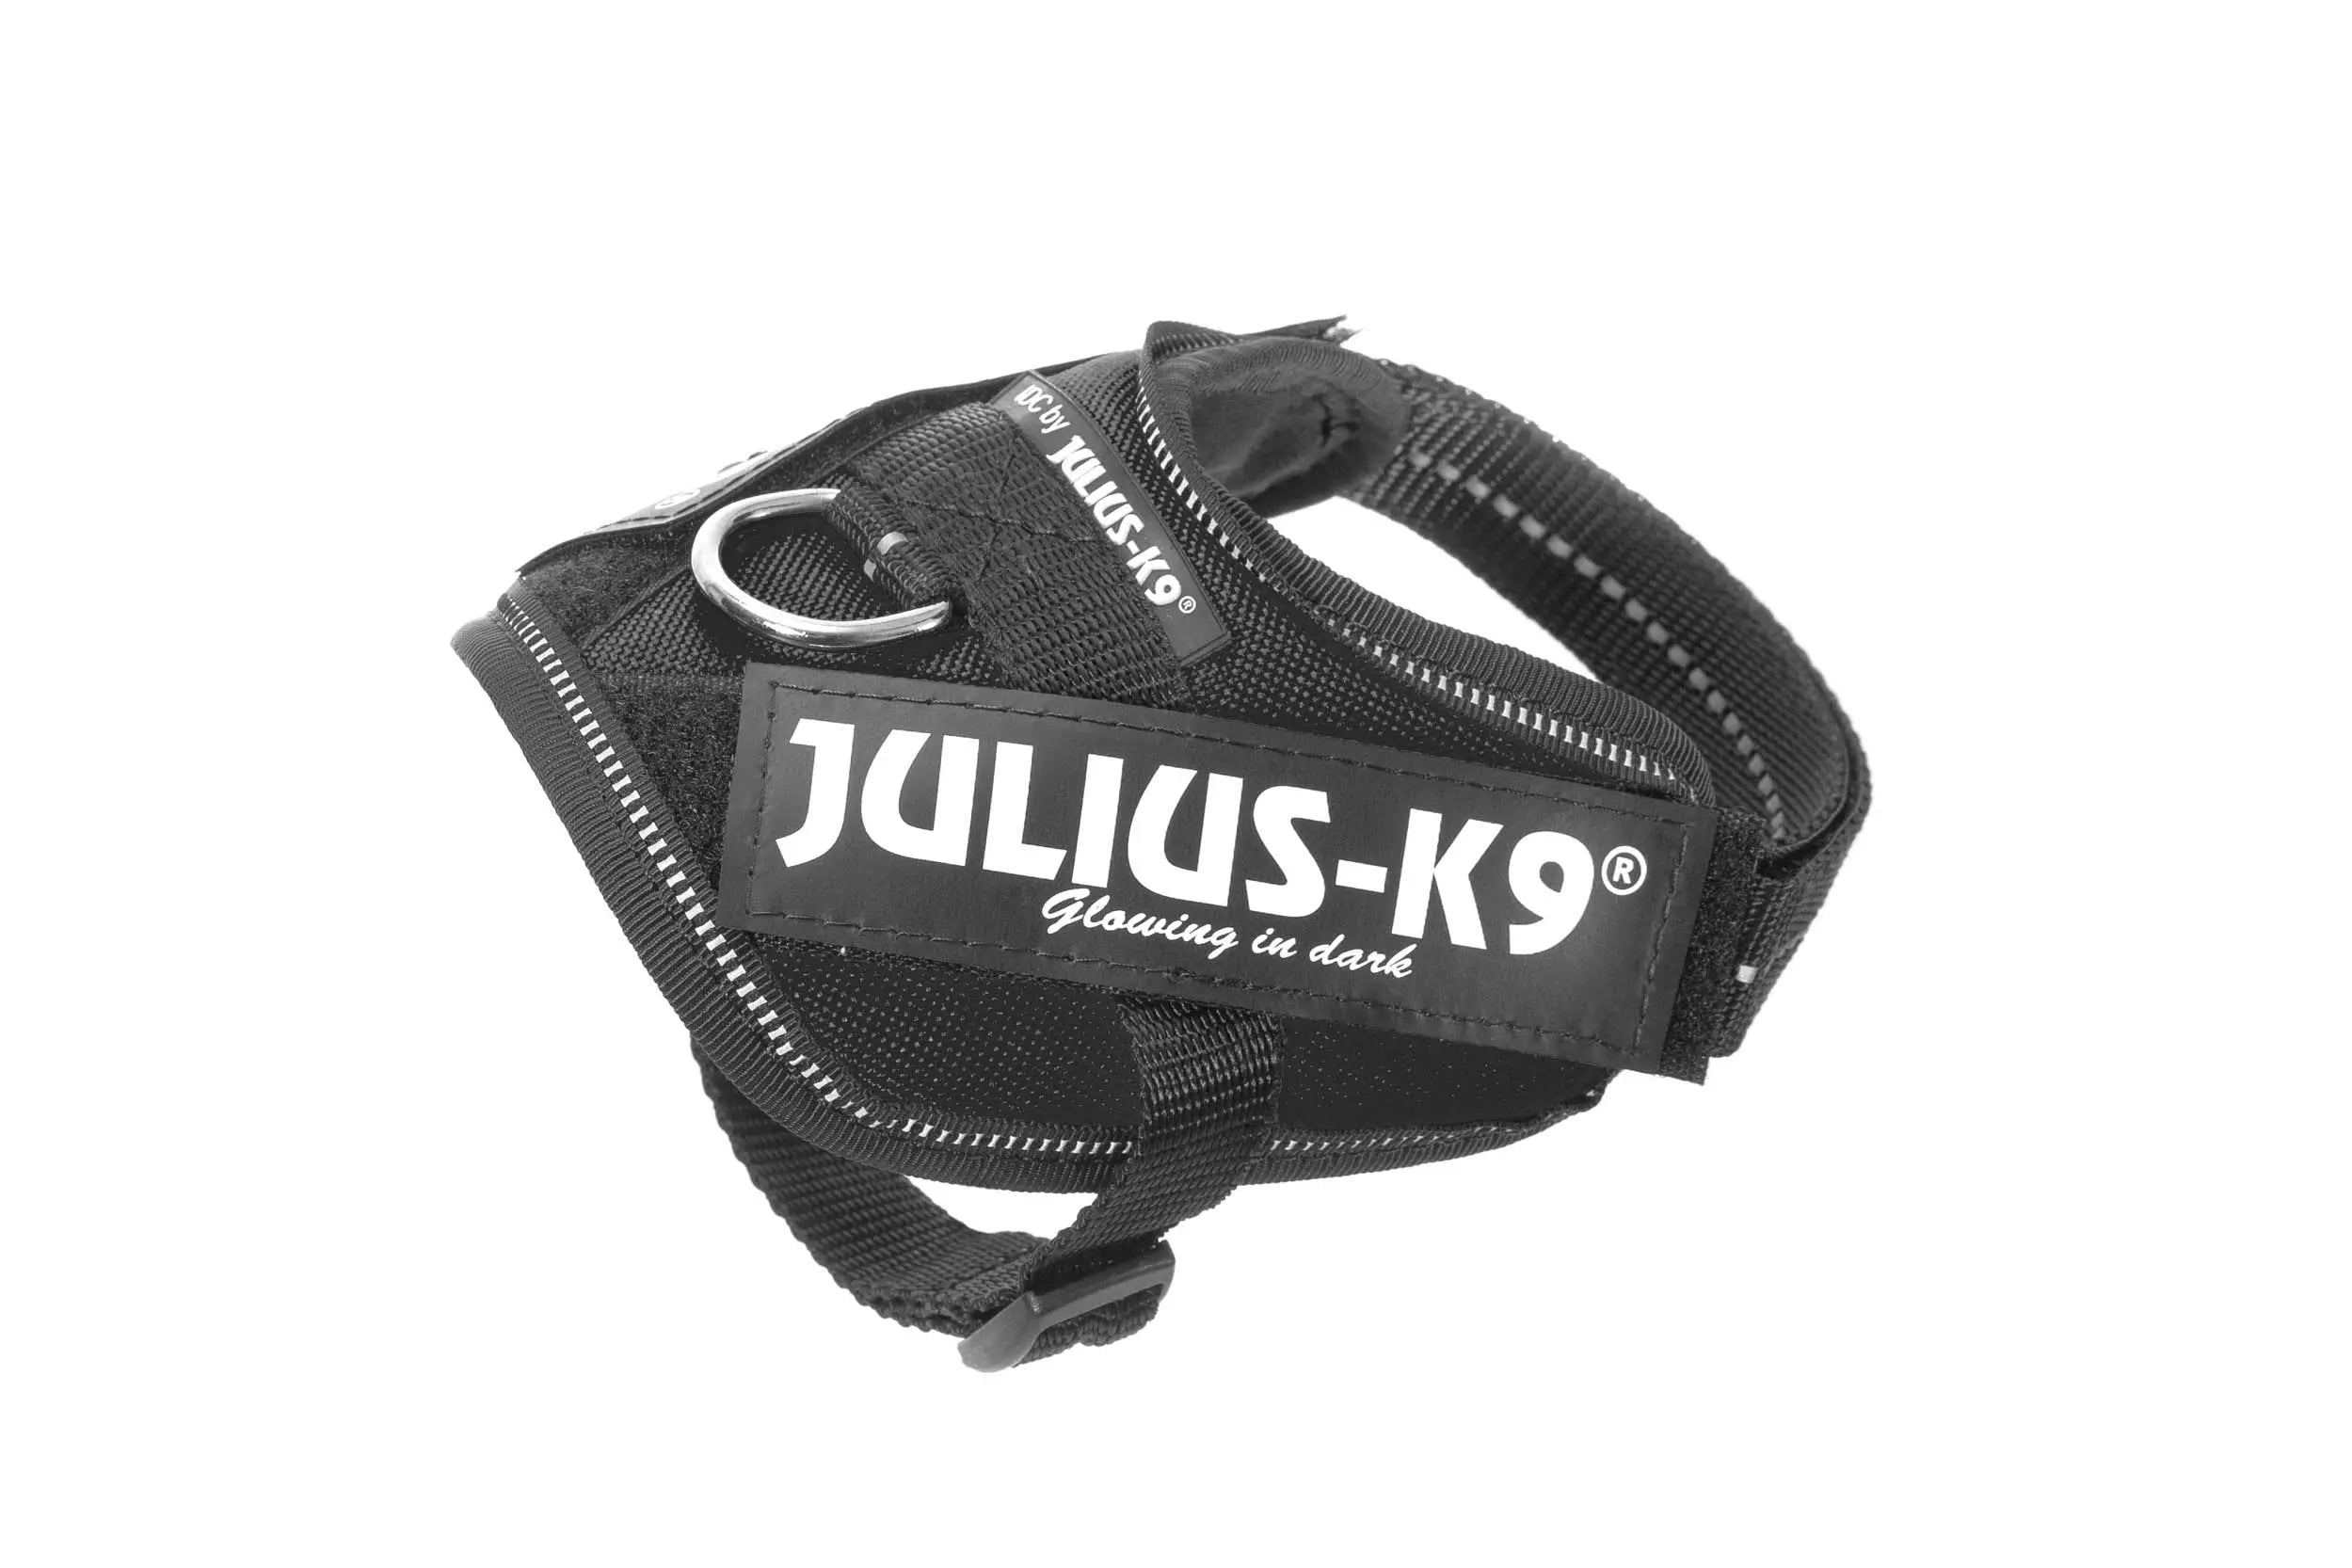 JULIUS K9 Logo Velcro Personalizado – Ni guau, Ni miau